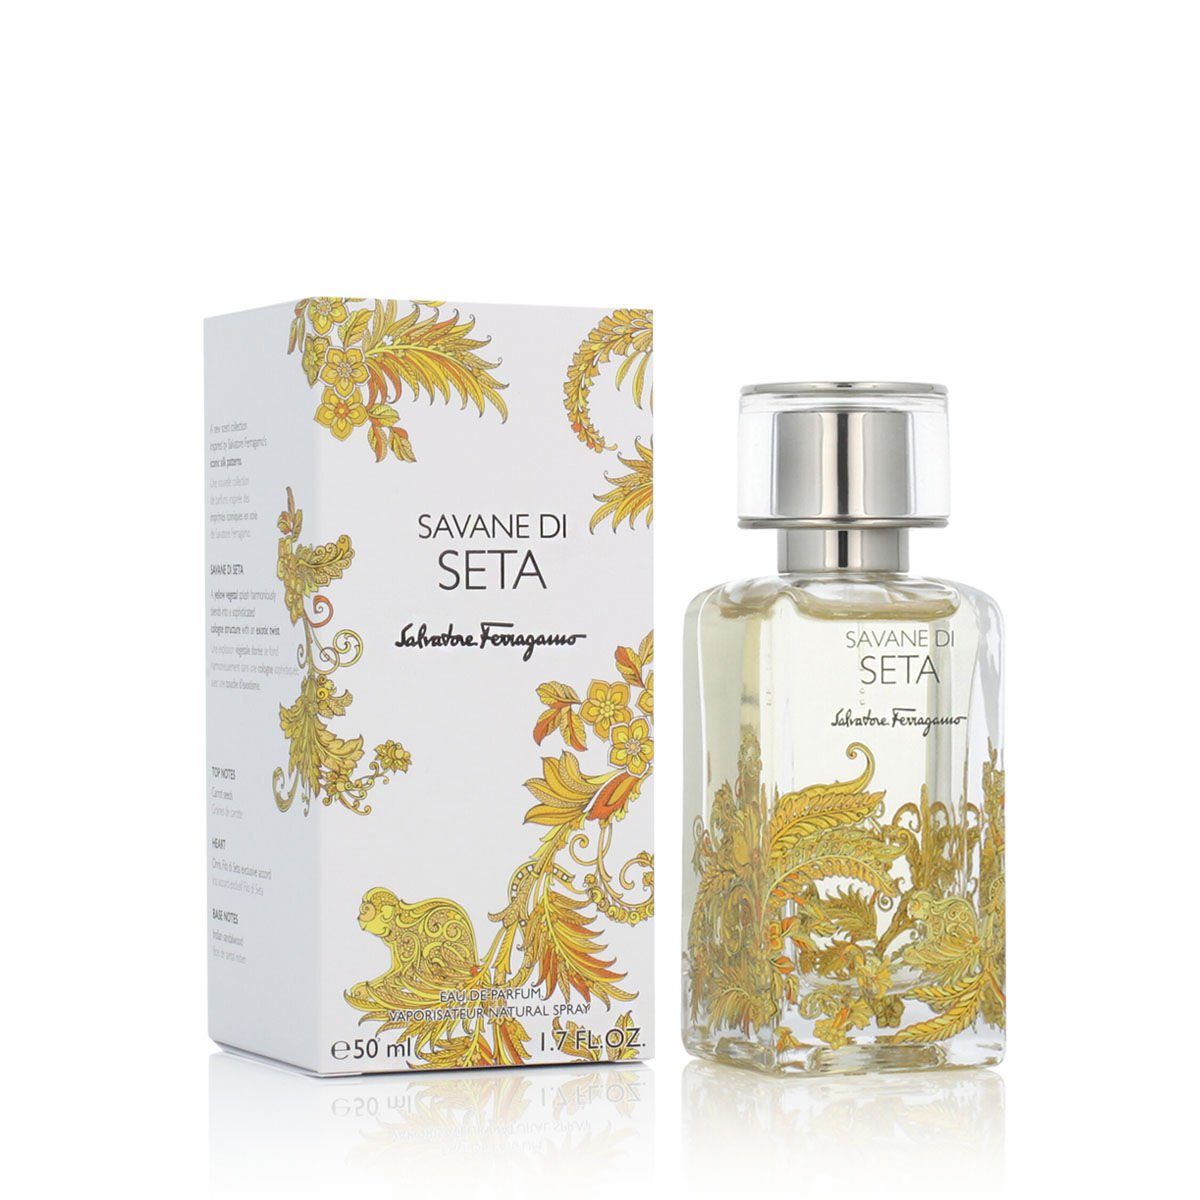 Salvatore Ferragamo Eau de Toilette Unisex-Parfüm de Savane 50 ml Seta di Eau Salvatore Ferragamo Parfum